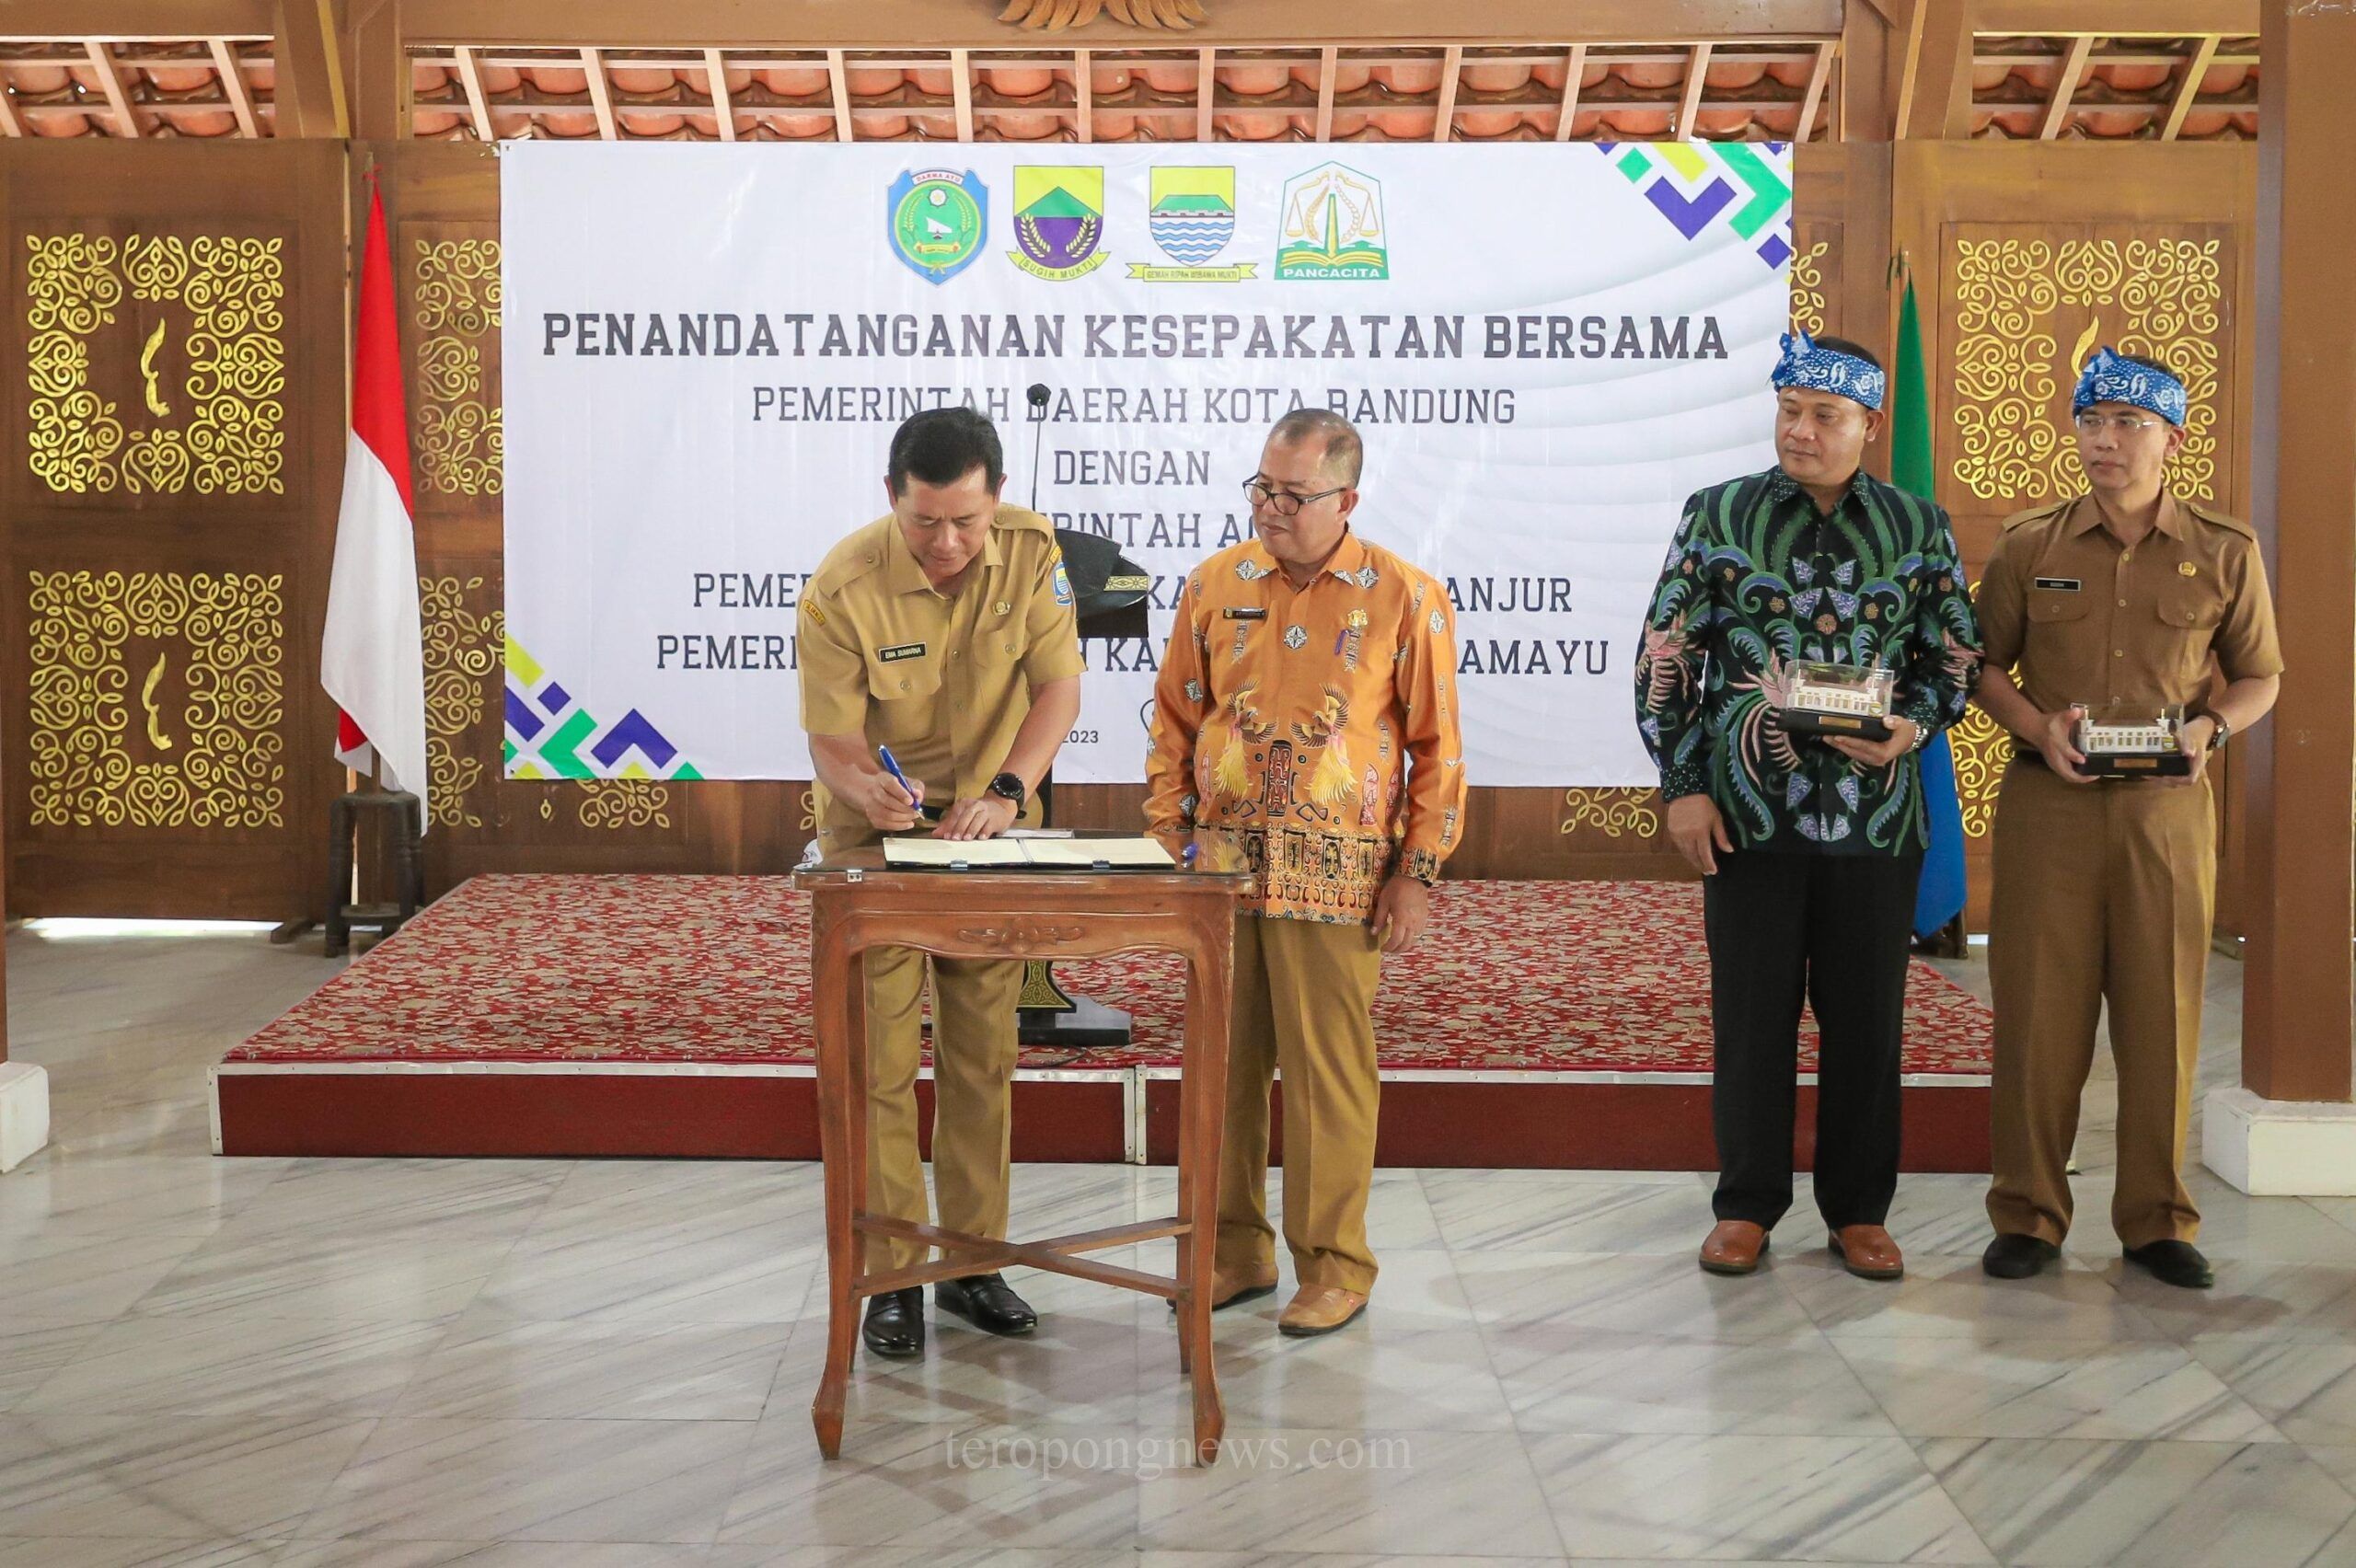 Pemkot Bandung Jalin Kerjasama dengan Tiga Daerah, Ini Tujuannya